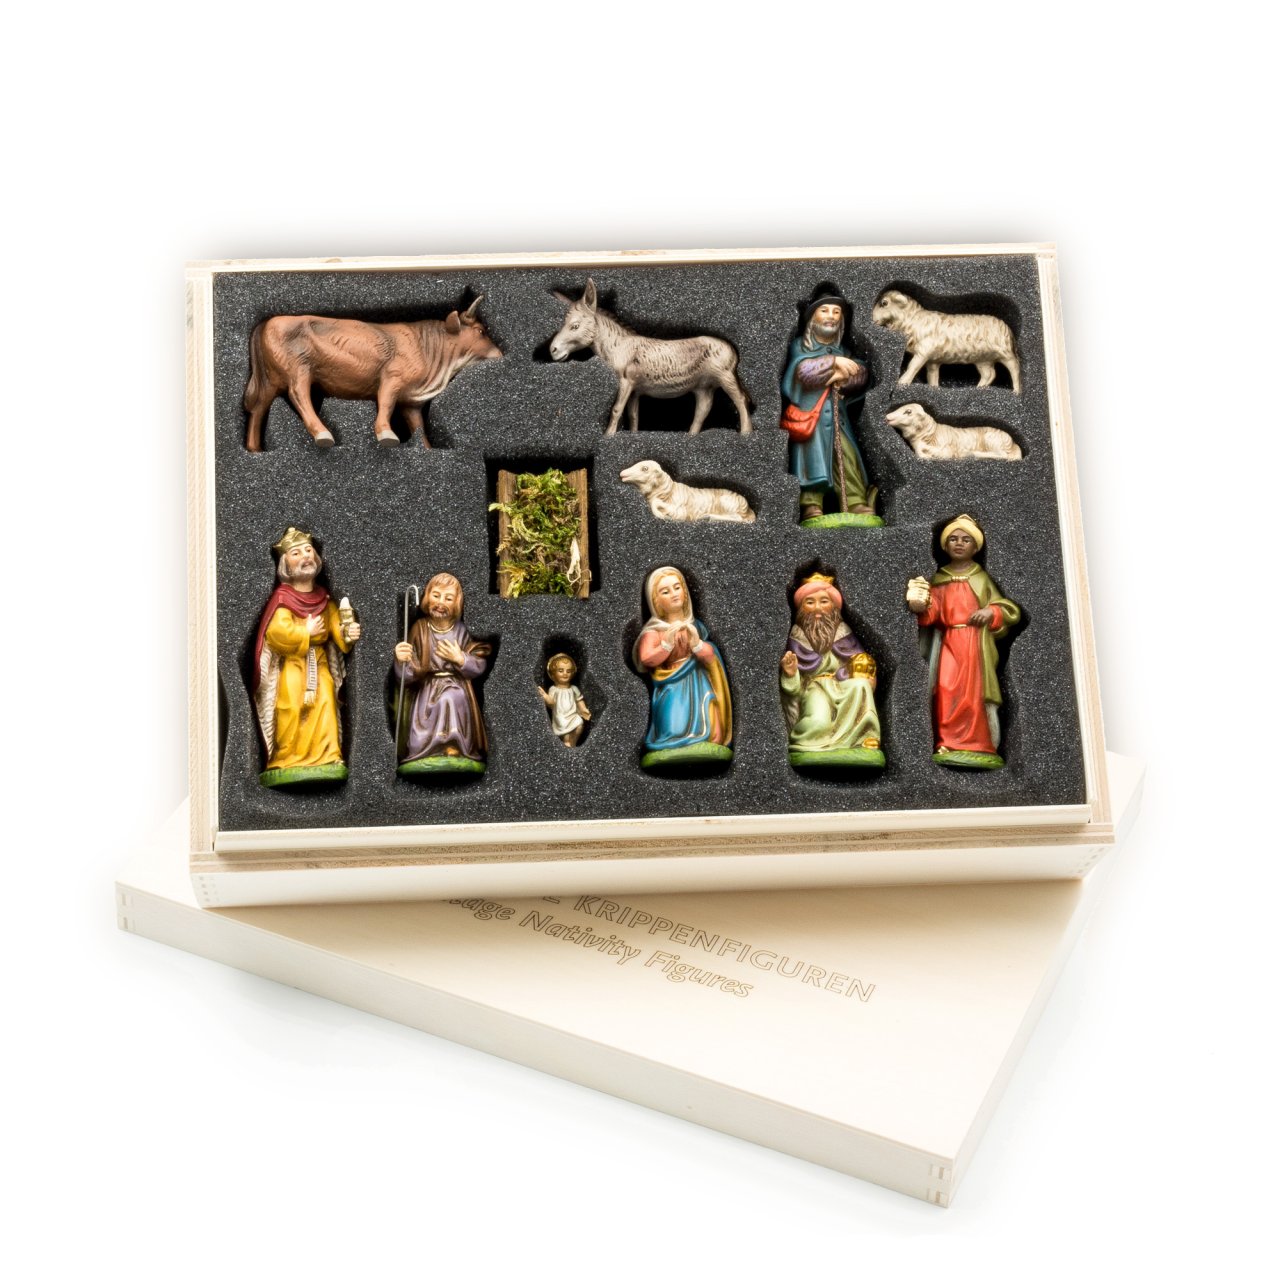 Twelve Piece Nativity Set, 9cm scale, by Marolin Manufaktur